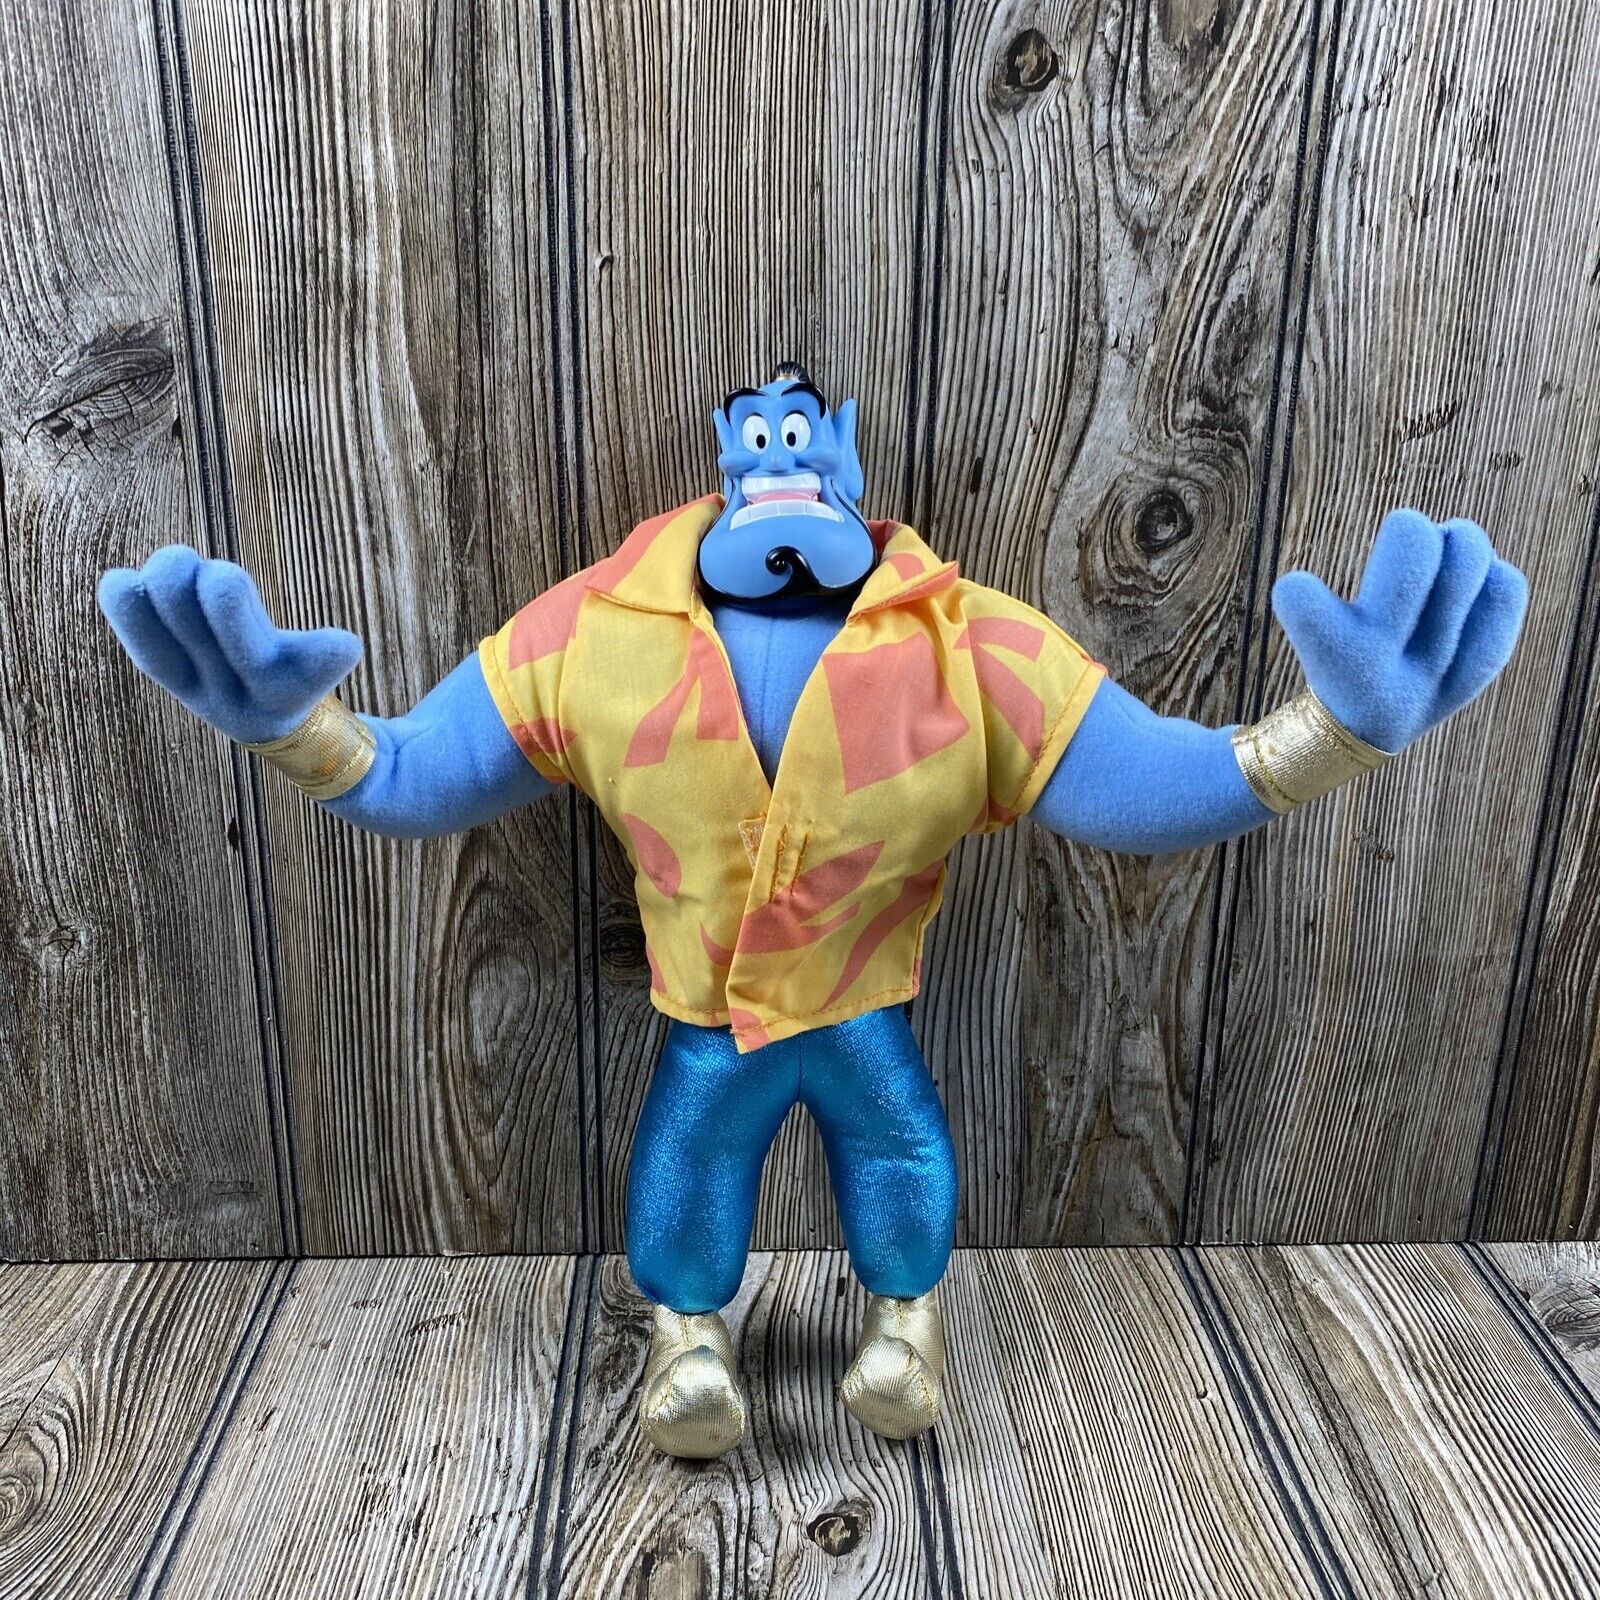 Aladdin Tourist Genie Figure 1993 Poseable Figure Toy 90’s Classic Disney